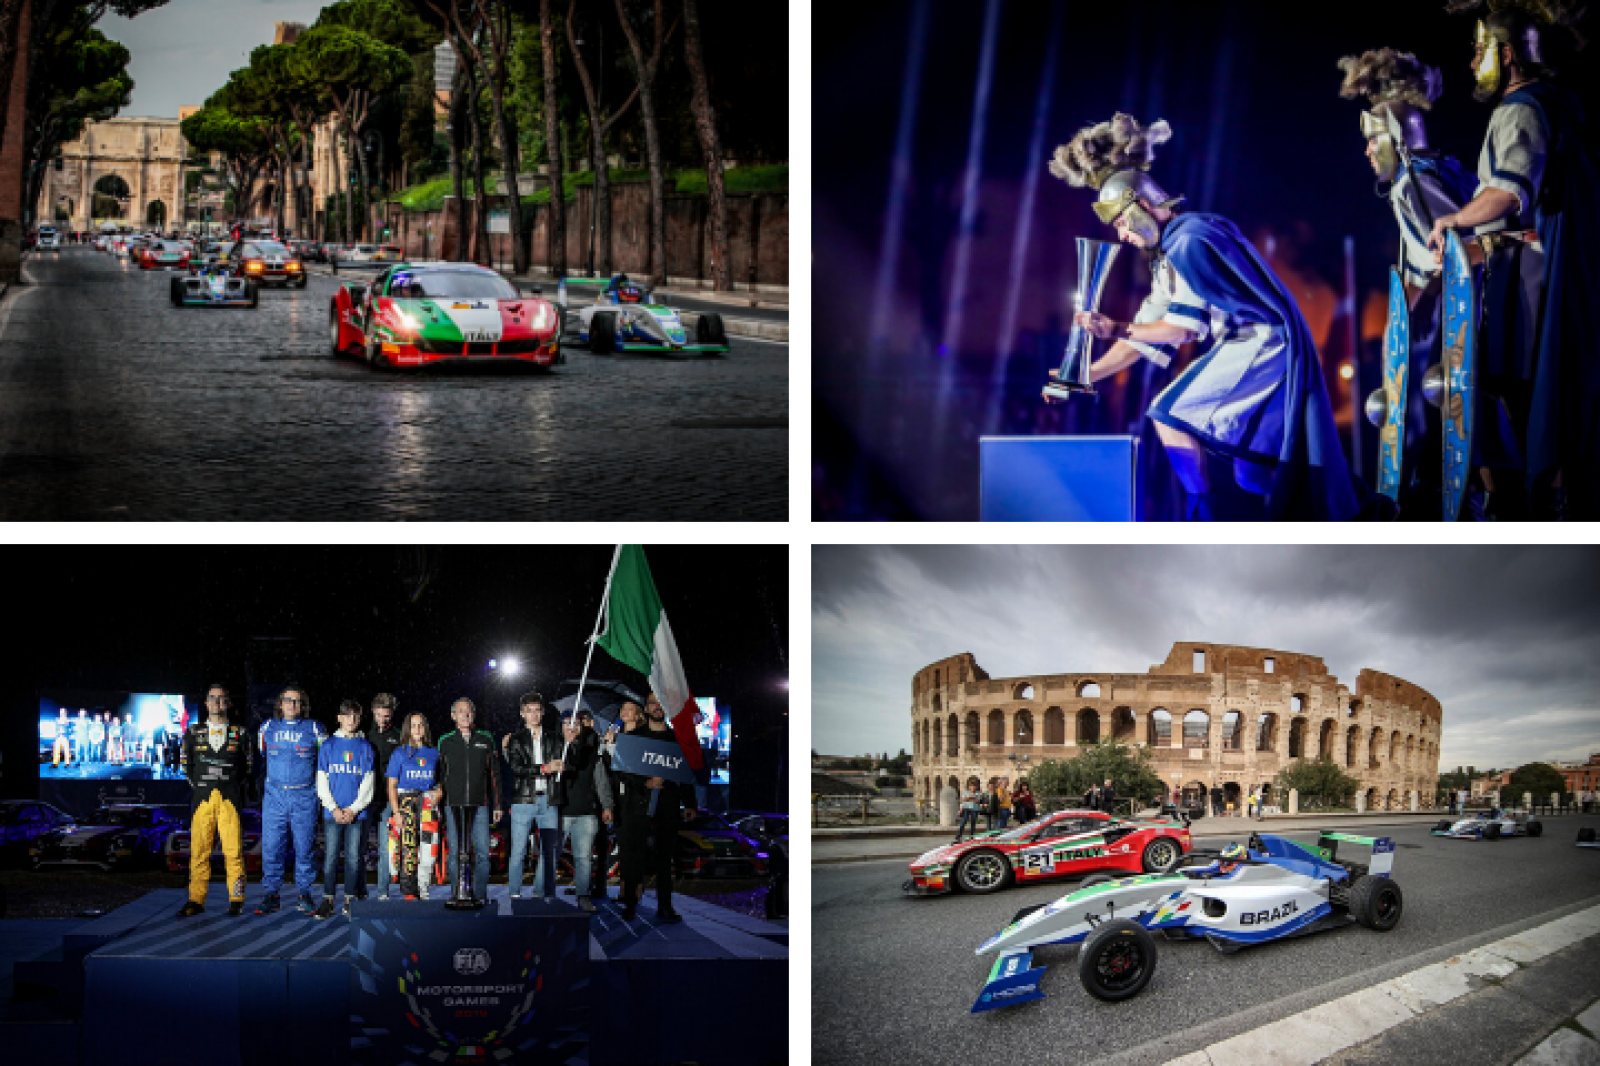 FIA Motorsport Games 2022 wins “Best Live Event” at The Race Media Awards